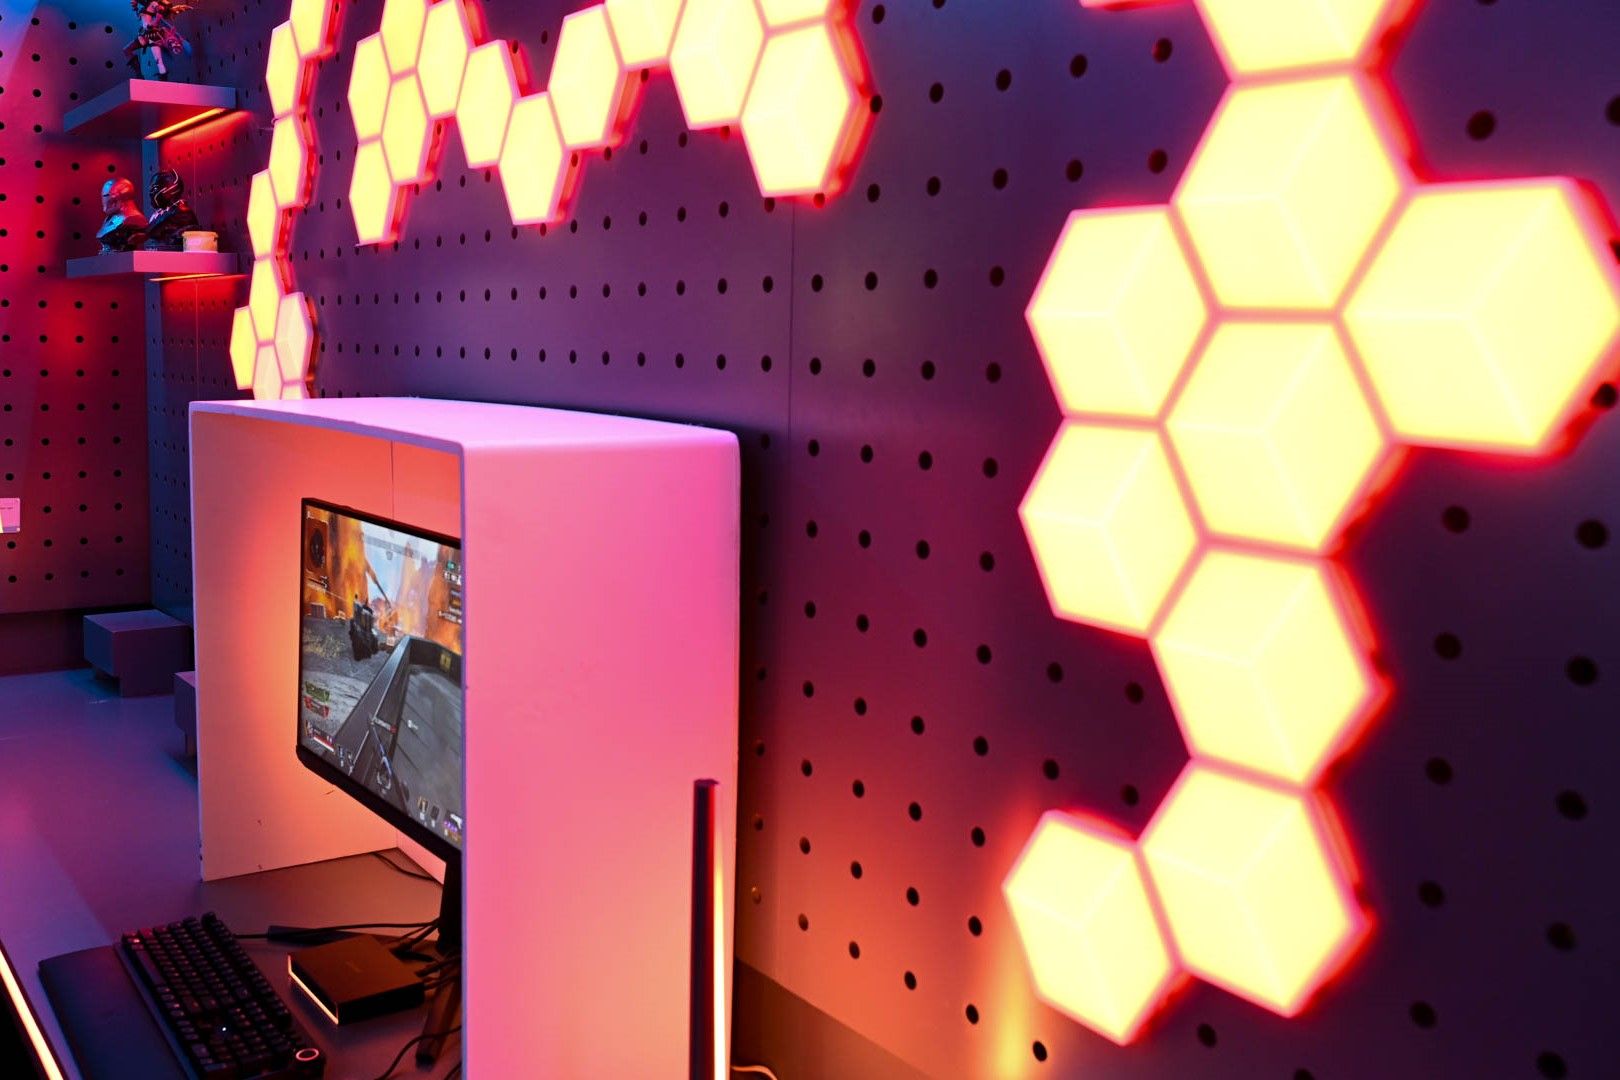 Govee Hexagon Light Panels Ultra review: The most impressive panels so far